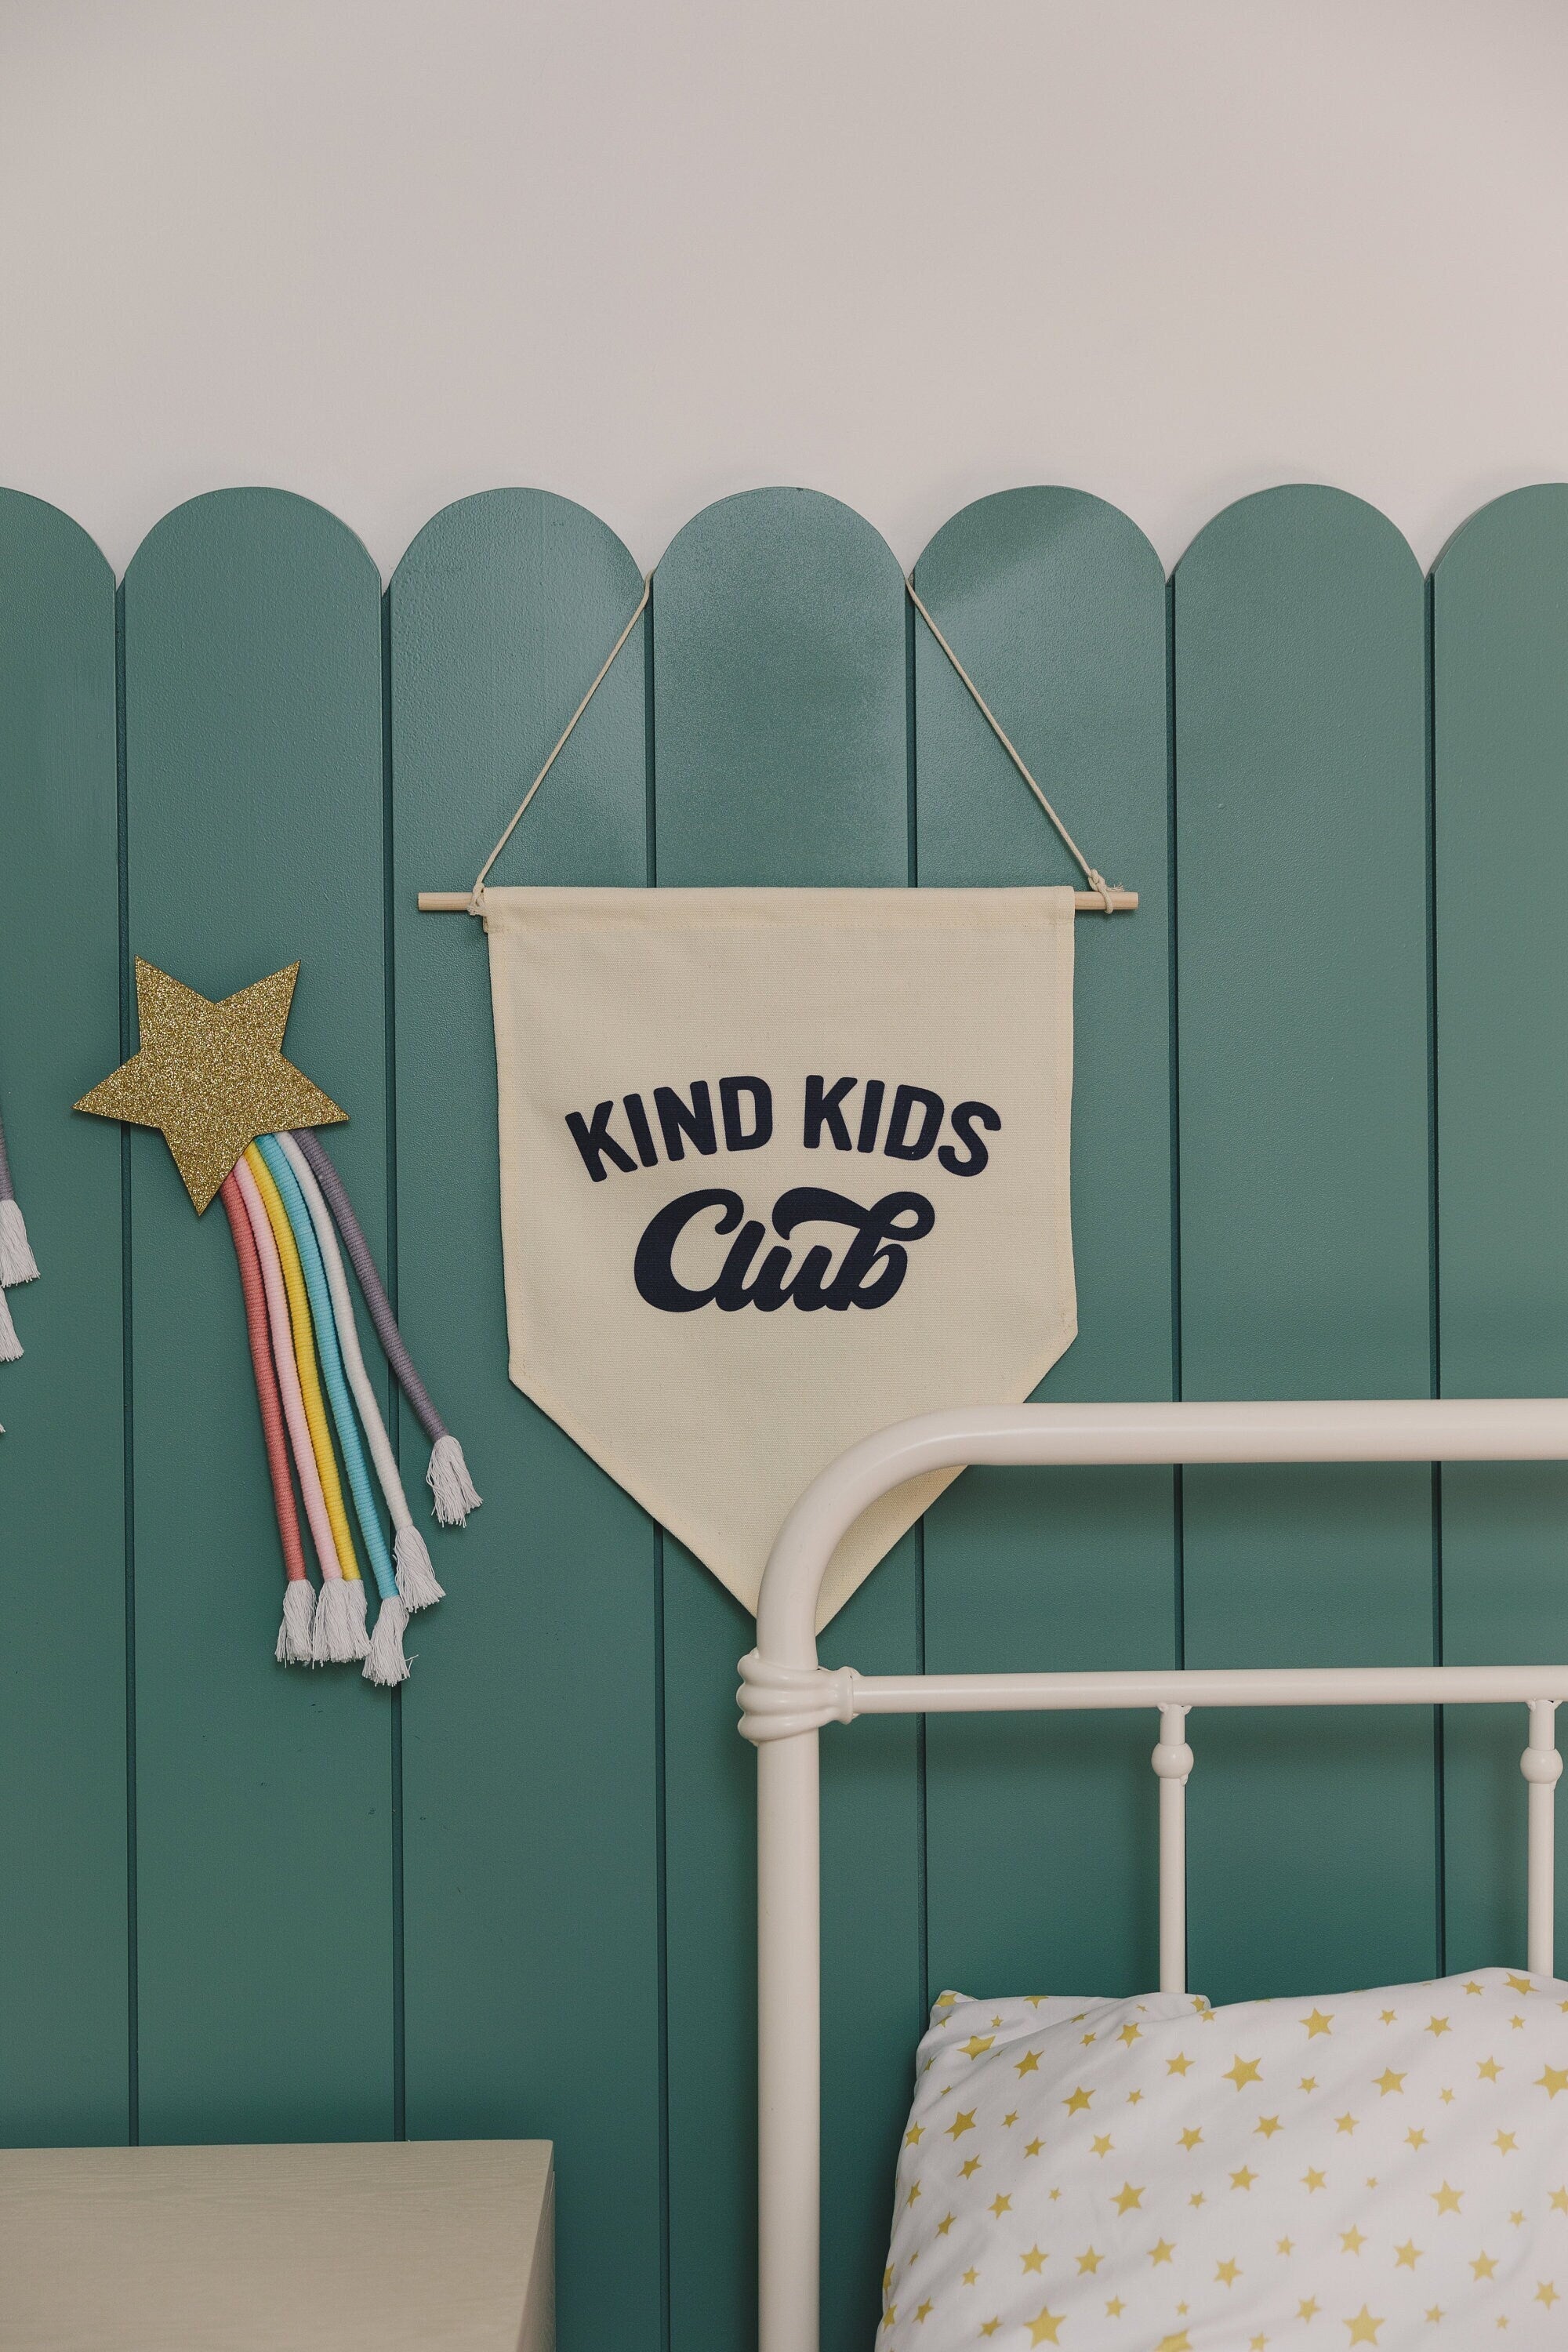 KIND KIDS CLUB Hanging Canvas Pennant - Natural Canvas Banner - Baby Boy Nursery Decor - Girls or Boys Playroom Flag - Kids Play Room Decor